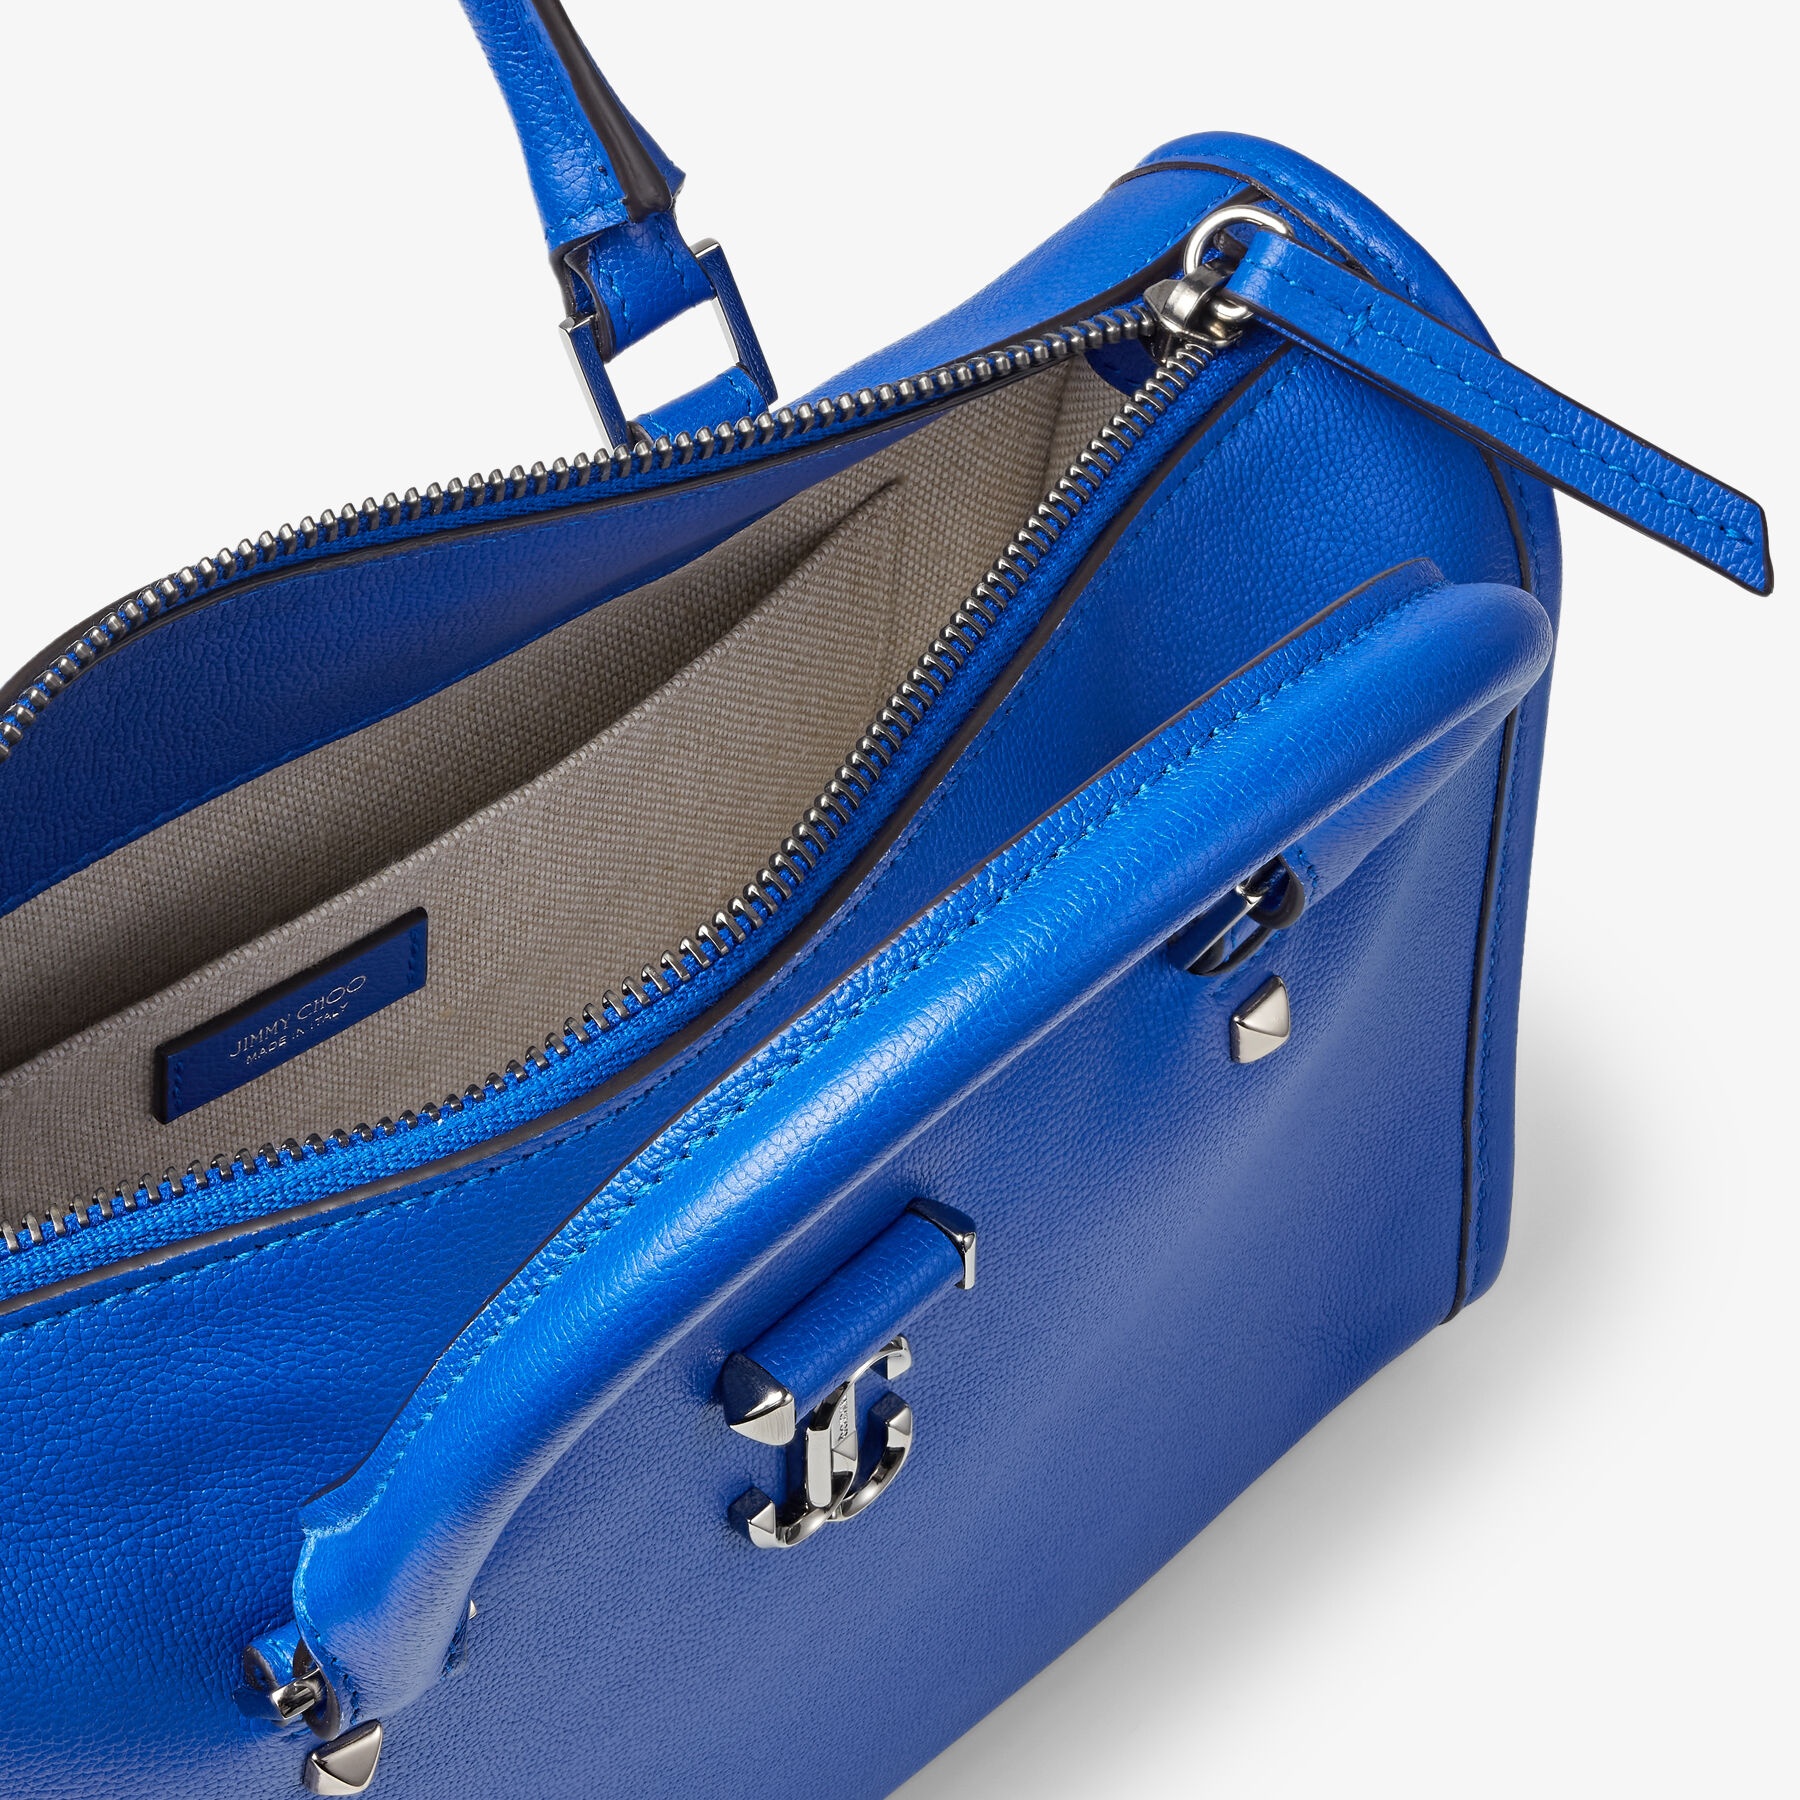 Webb Top Handle S
Ultraviolet Fine Grainy Calf Leather Top Handle Bag - 3